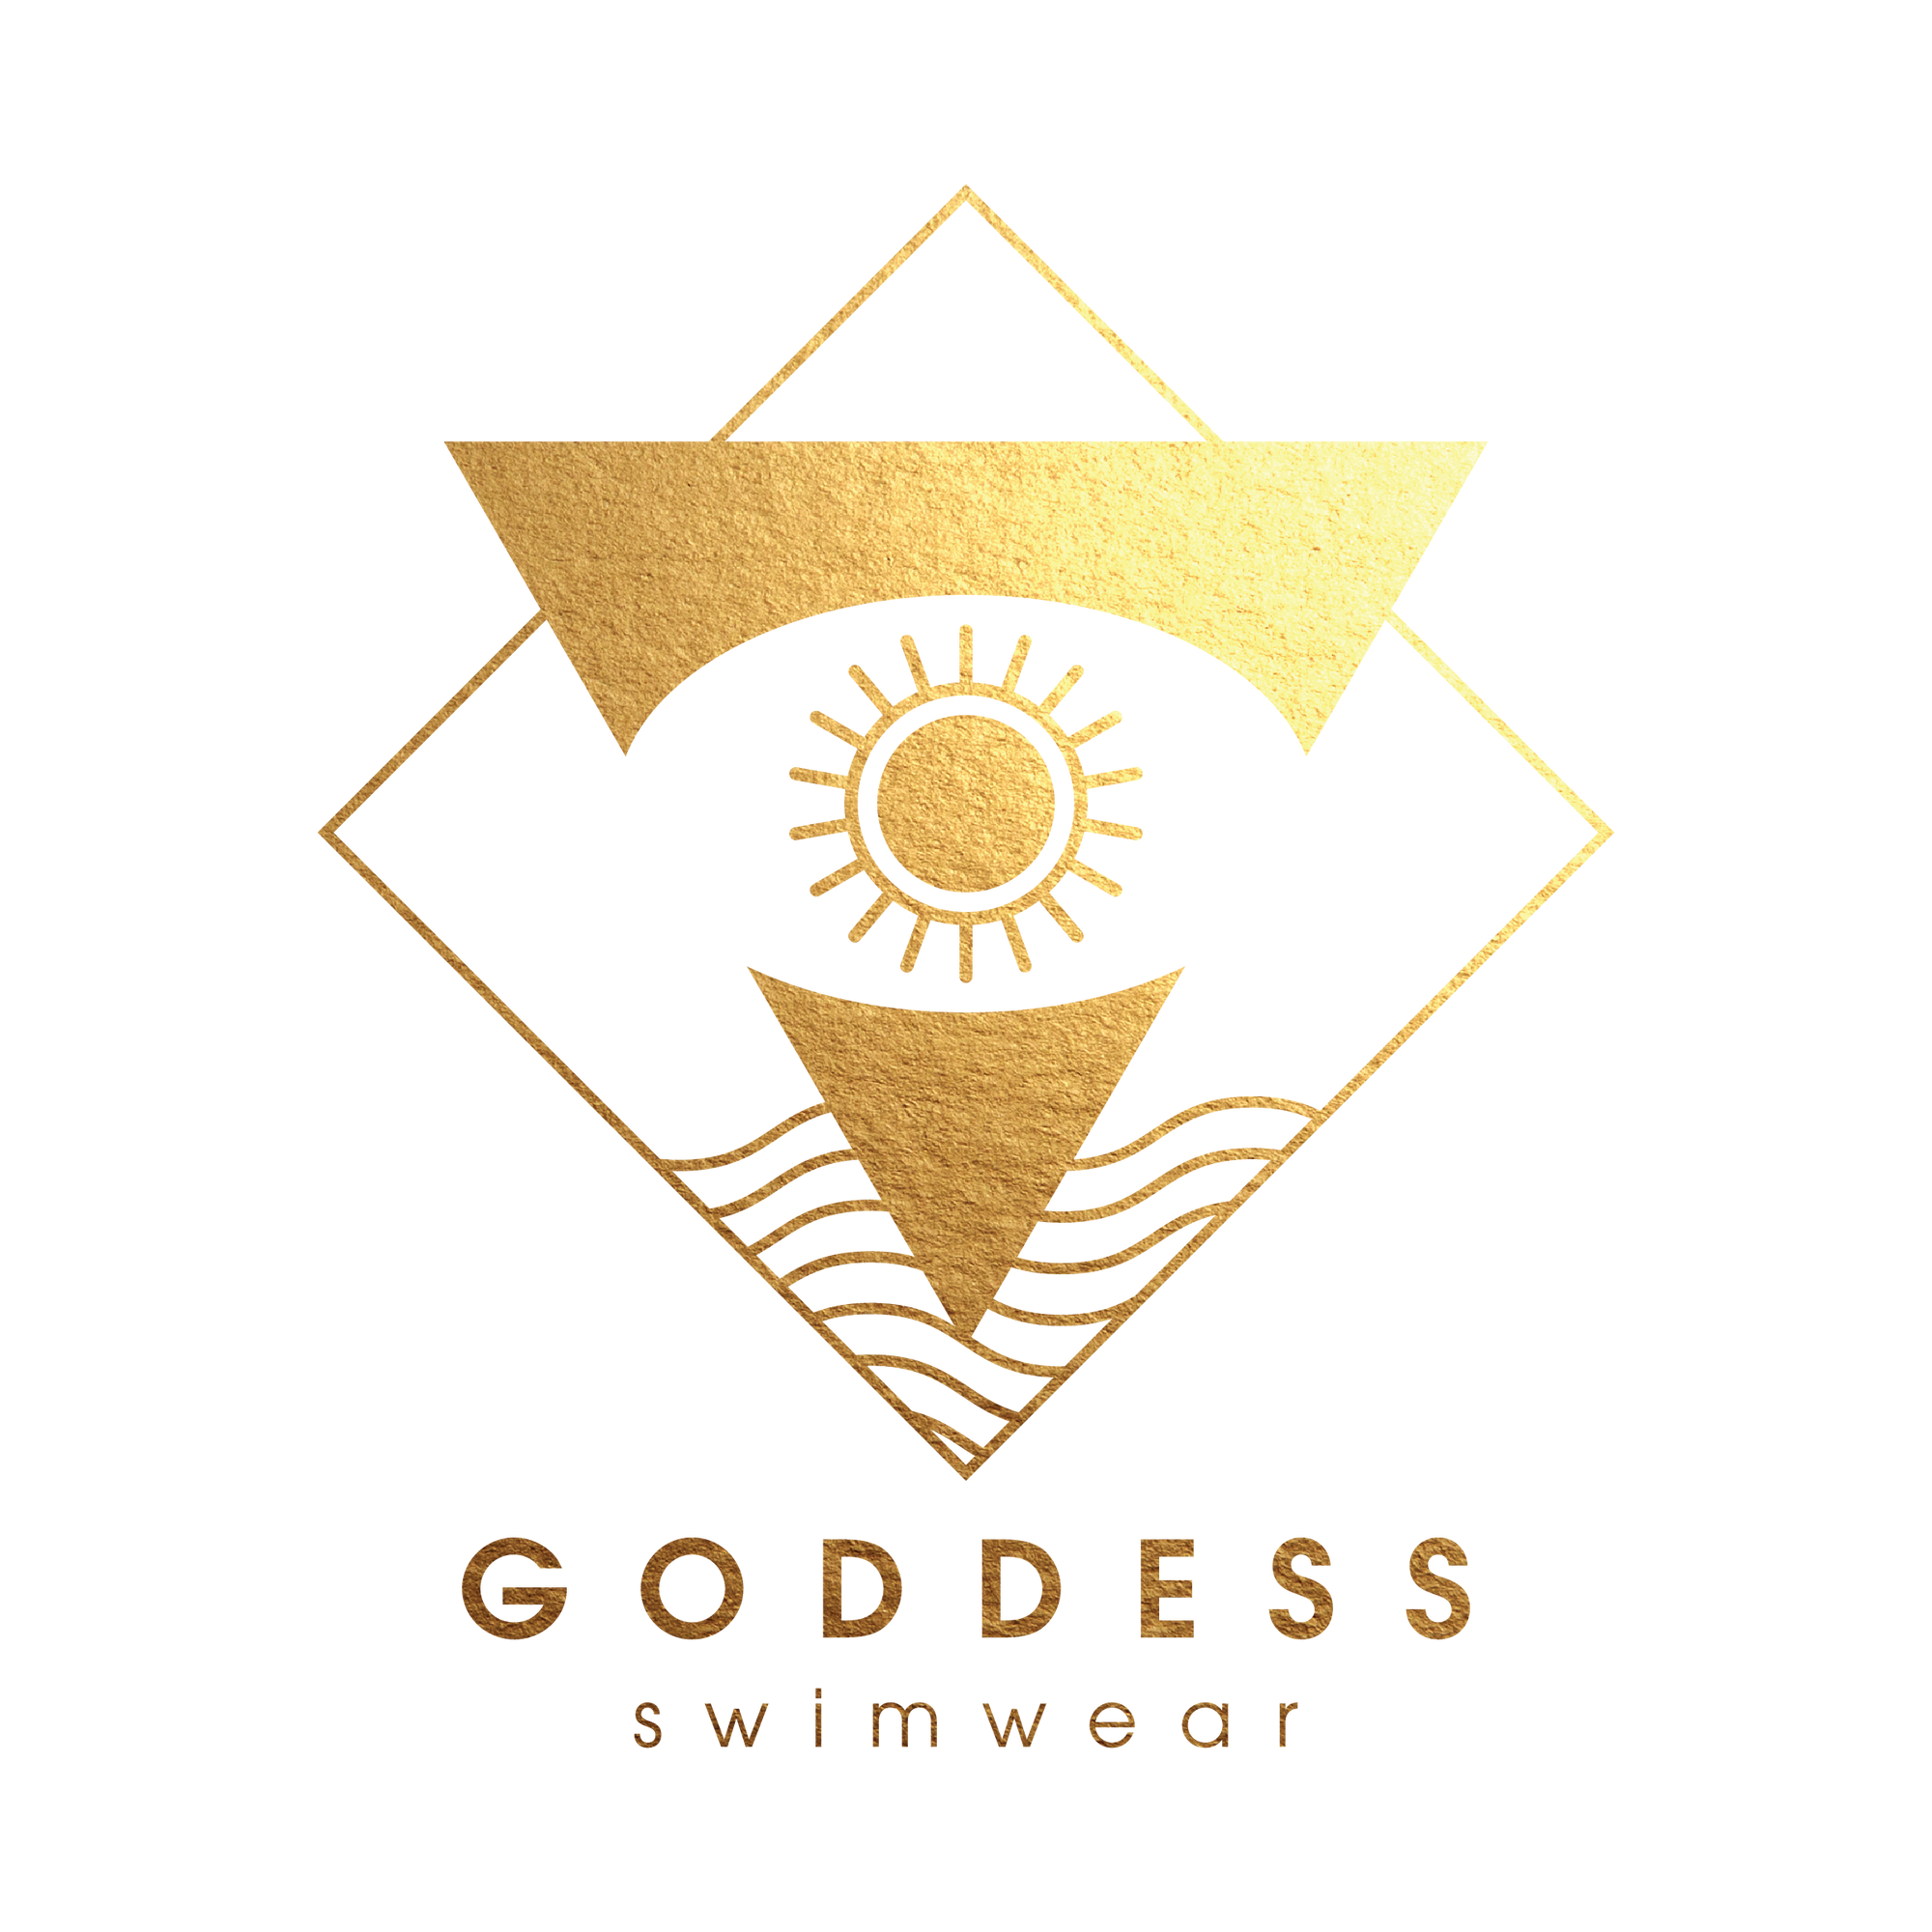 Goddess Swimwear